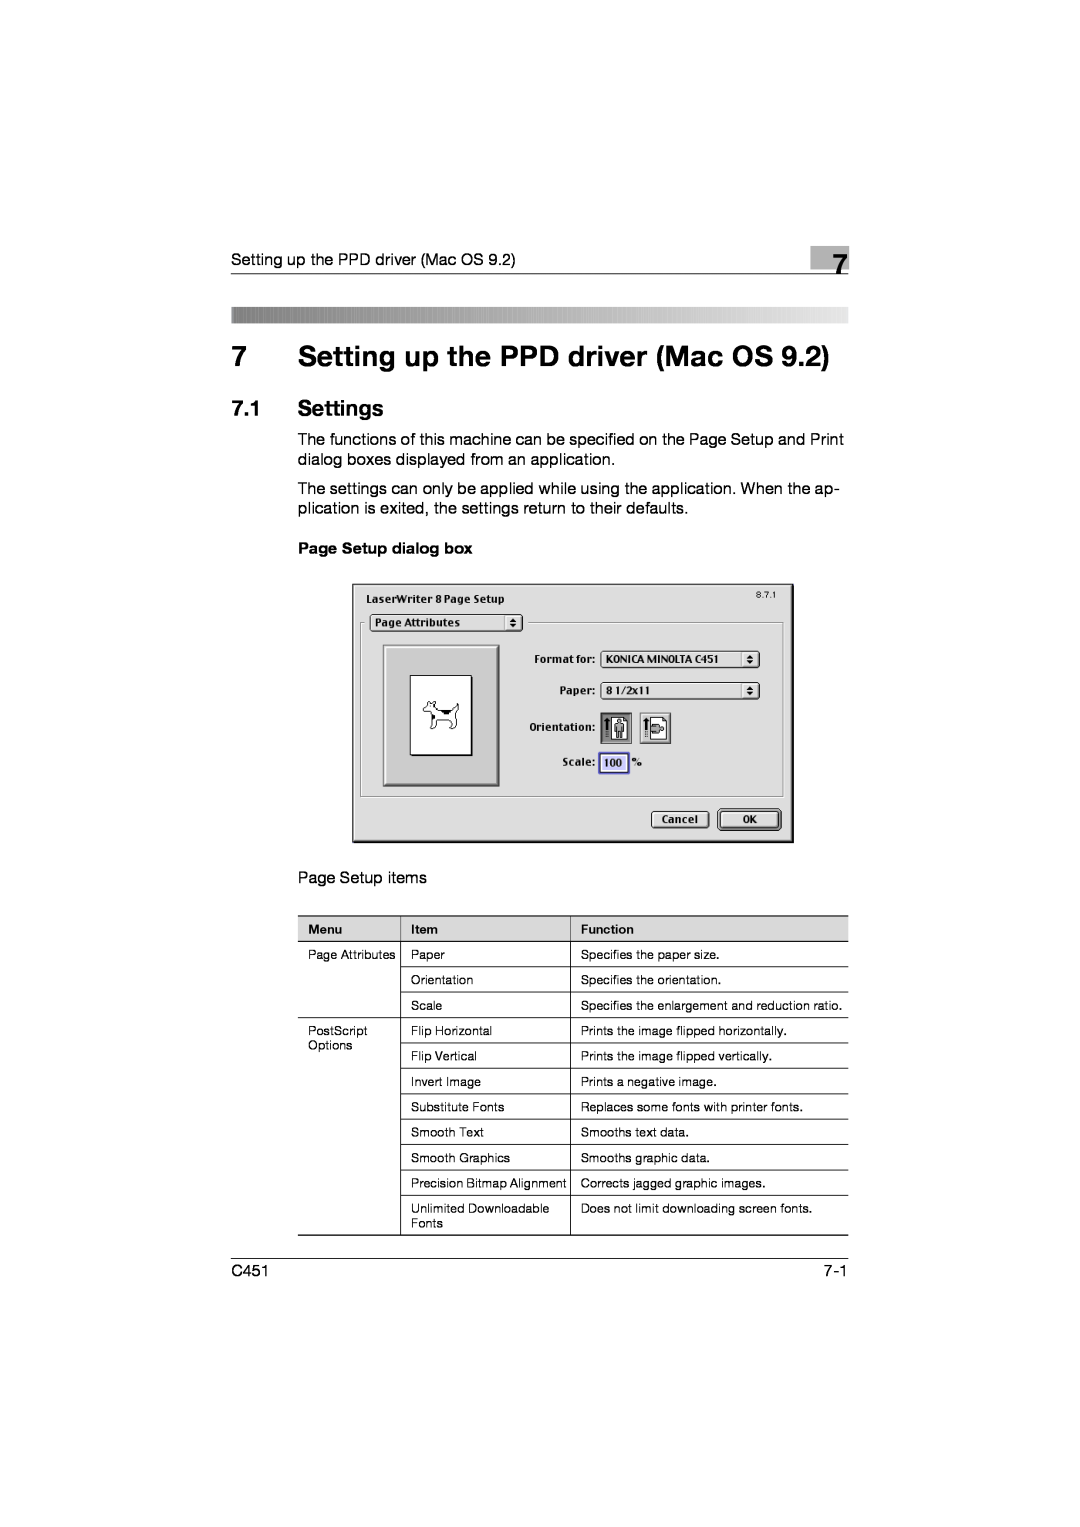 Konica Minolta C451 manual 7Setting up the PPD driver Mac OS, 7.1Settings 